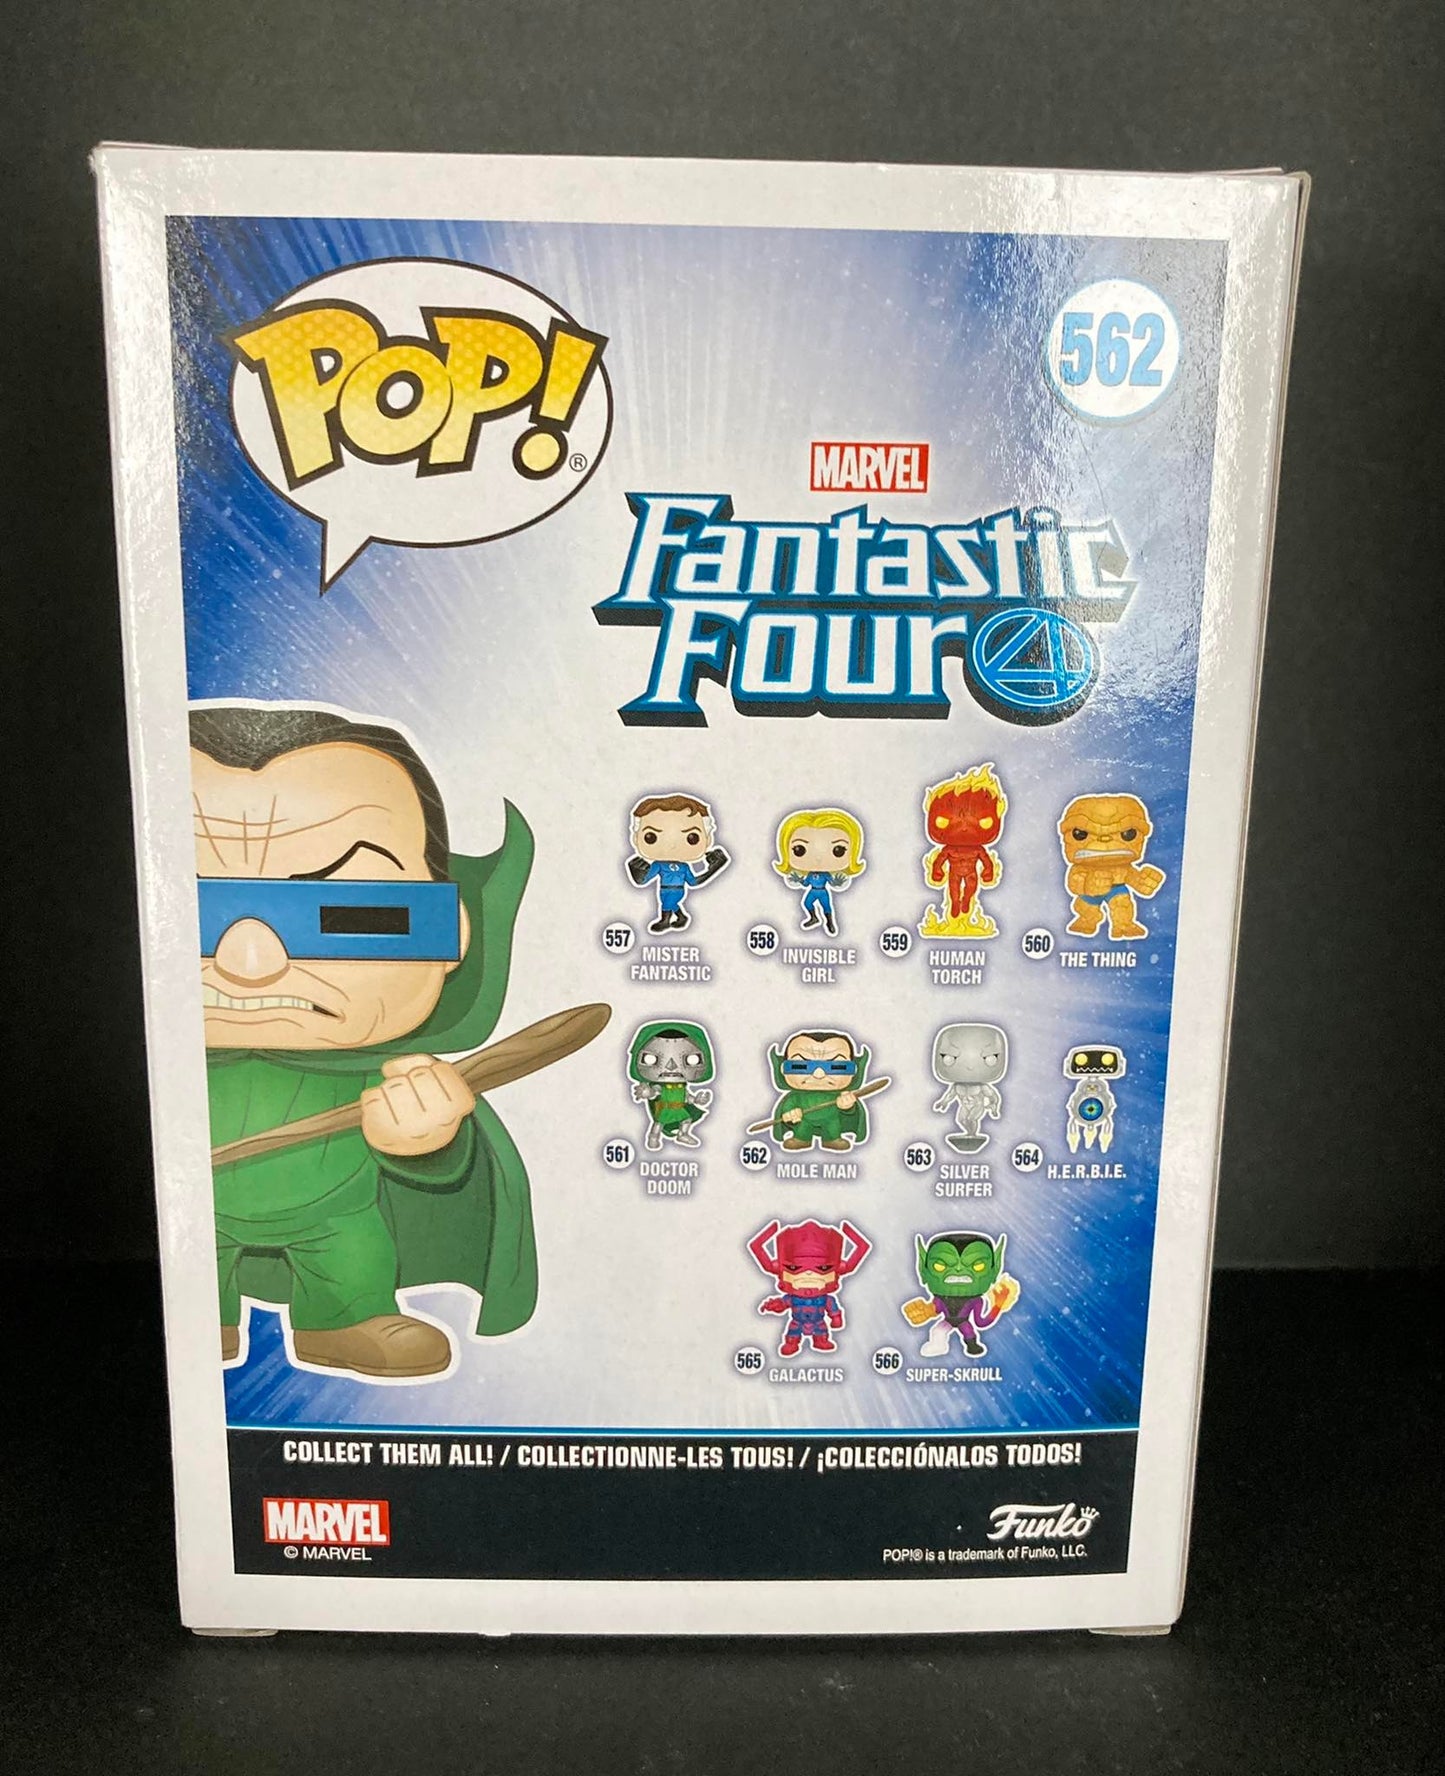 Fantastic Four Pop-figuur [Marvel] #562 Mole Man